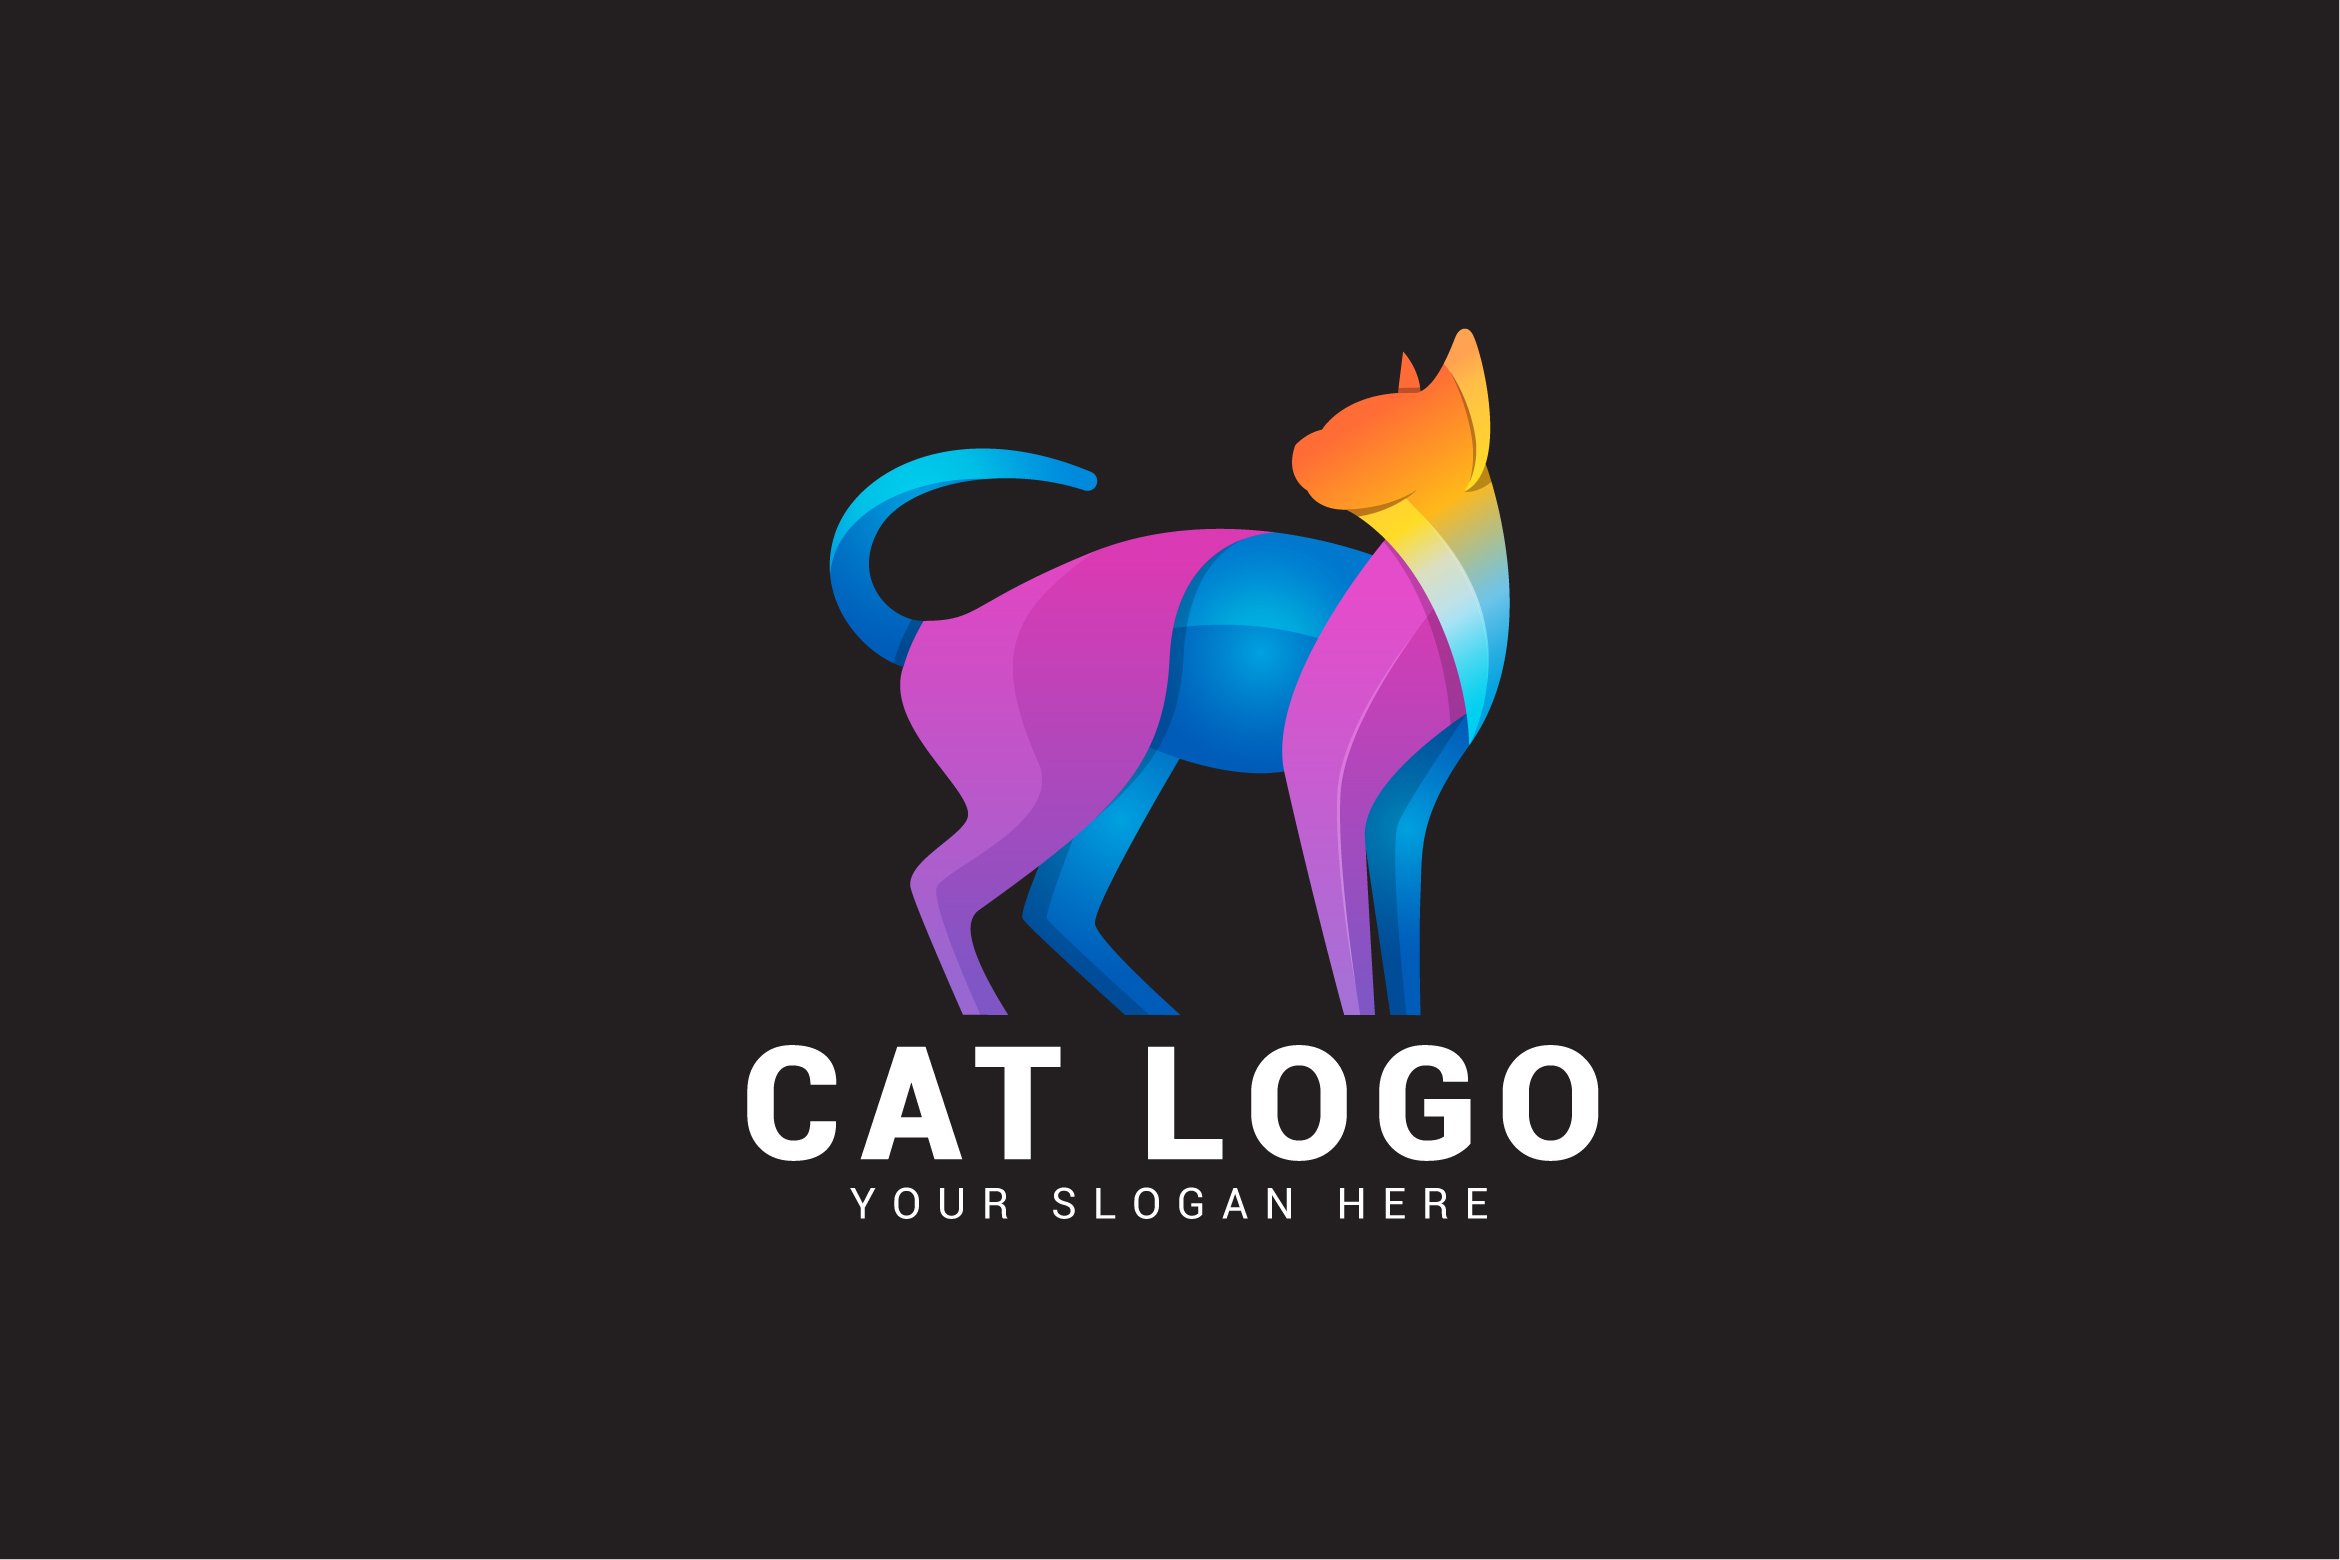 CAT LOGO cover image.